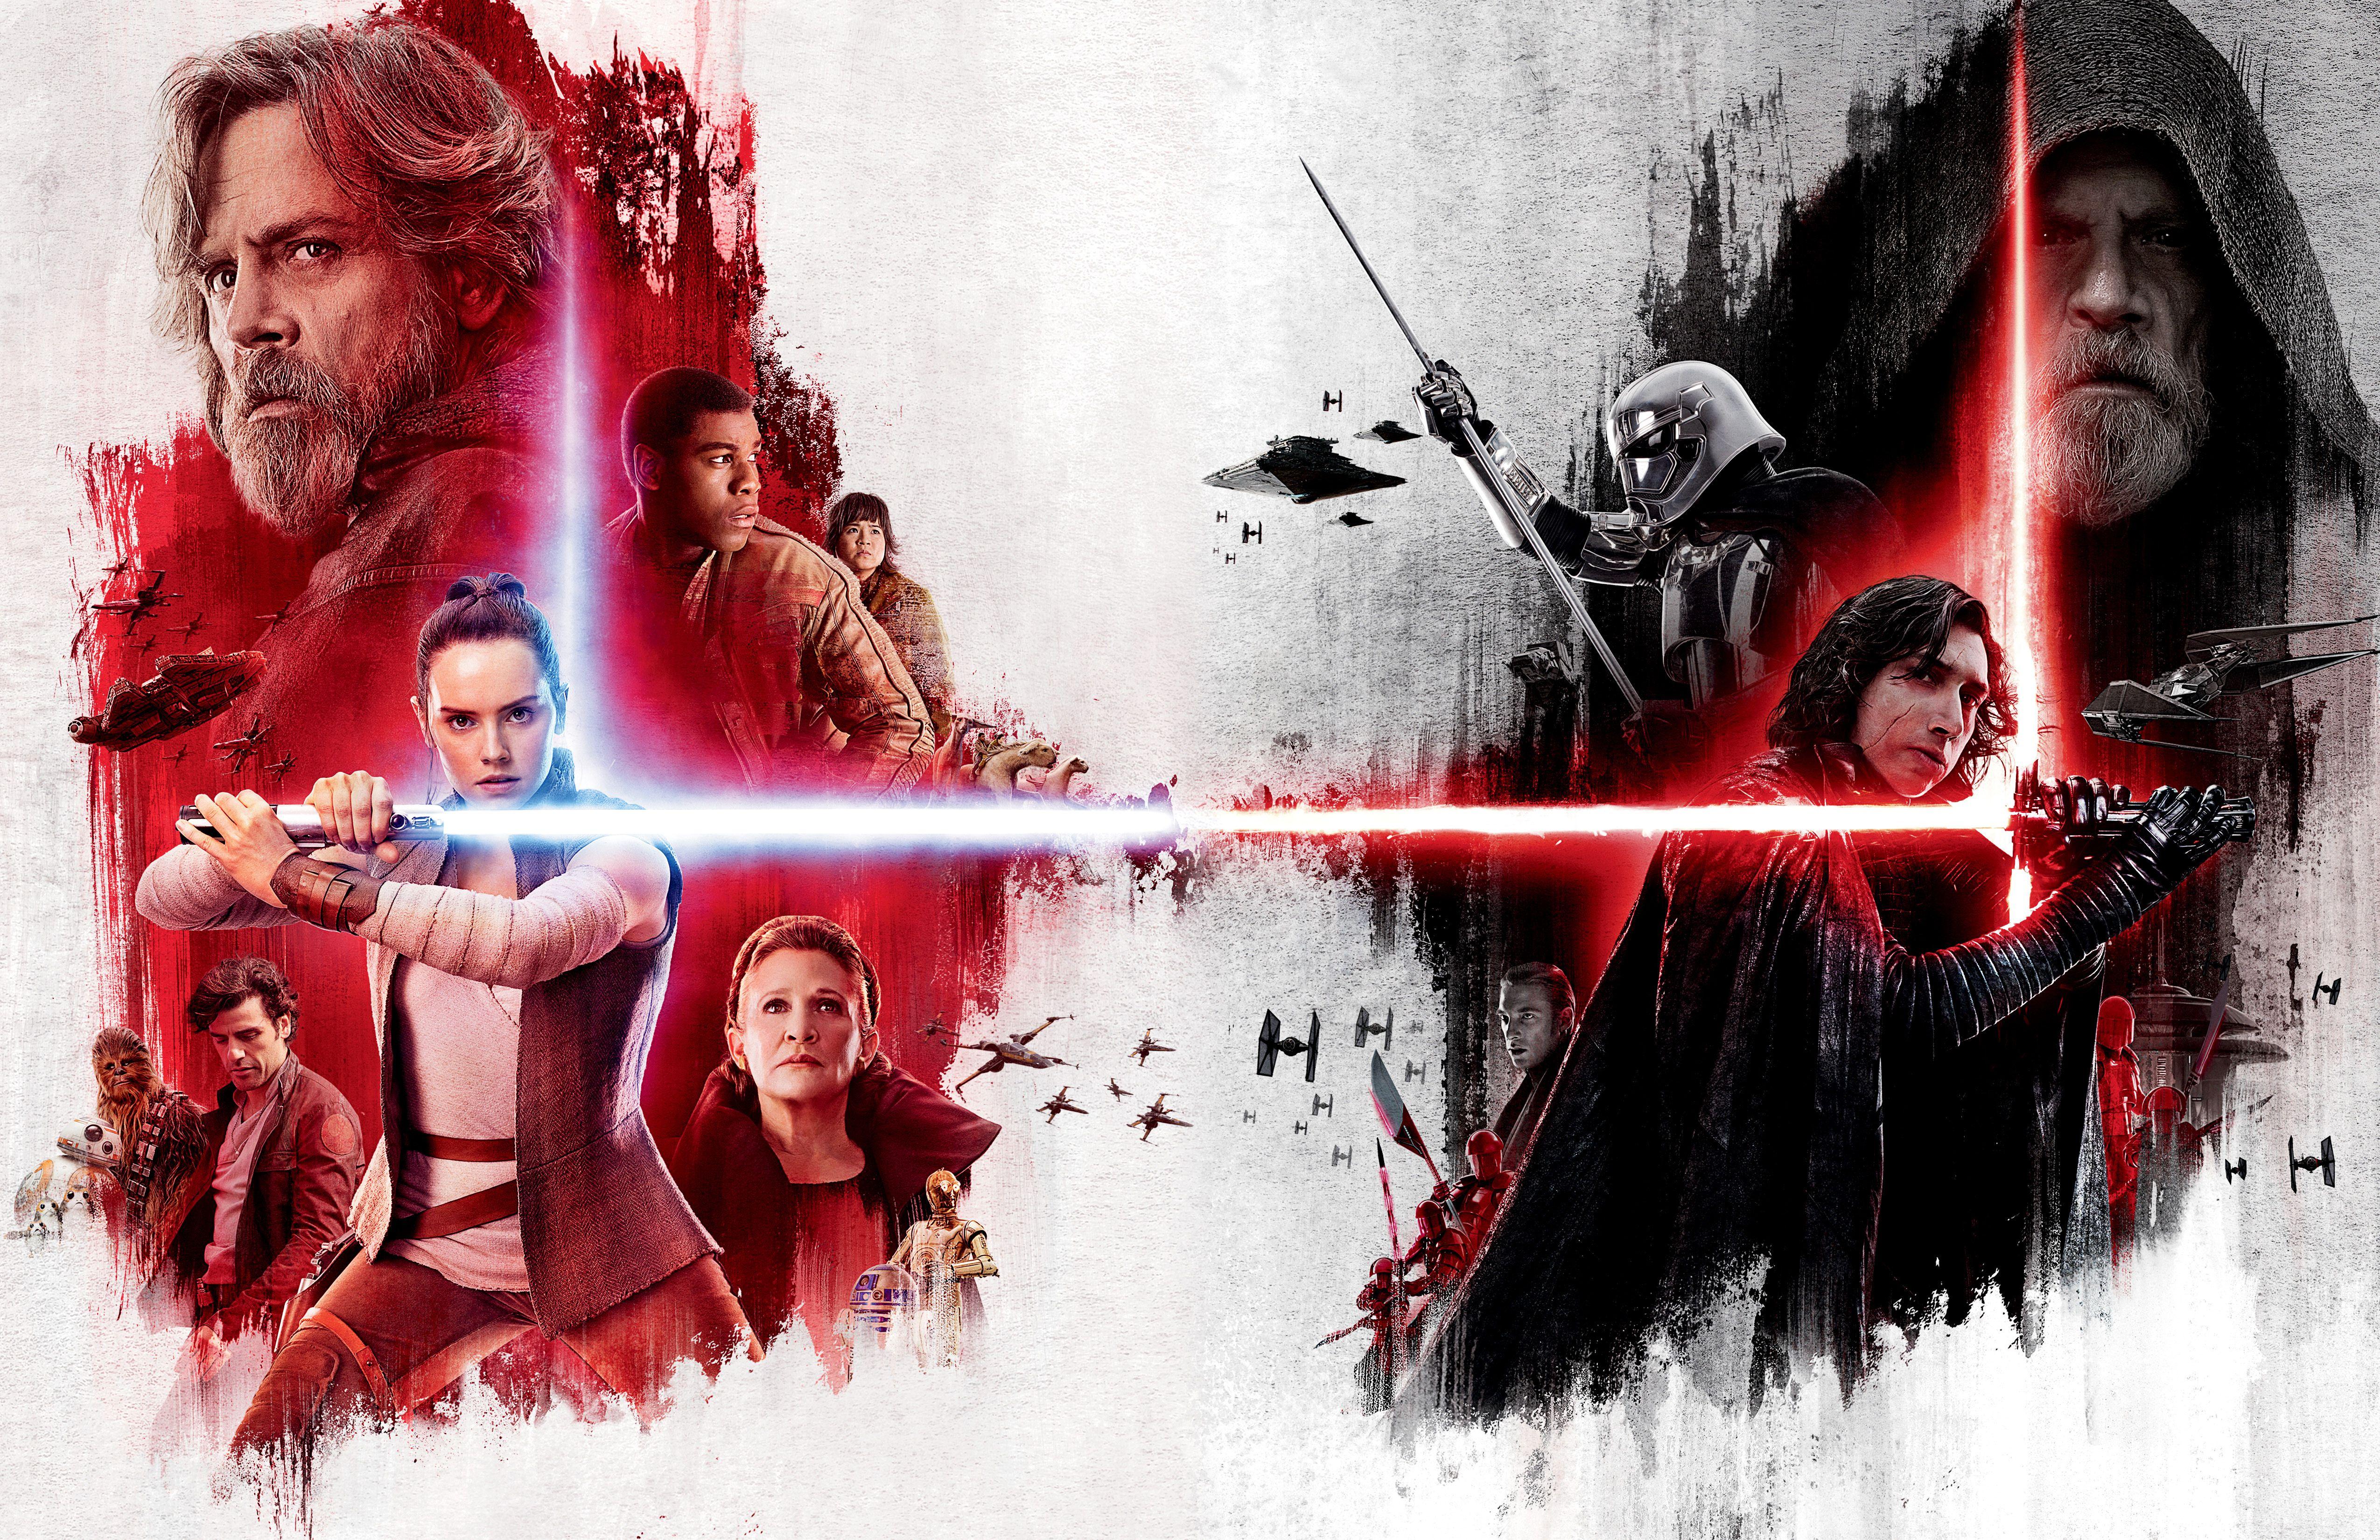 Star Wars: The Last Jedi 4k Ultra HD Wallpaper and Background